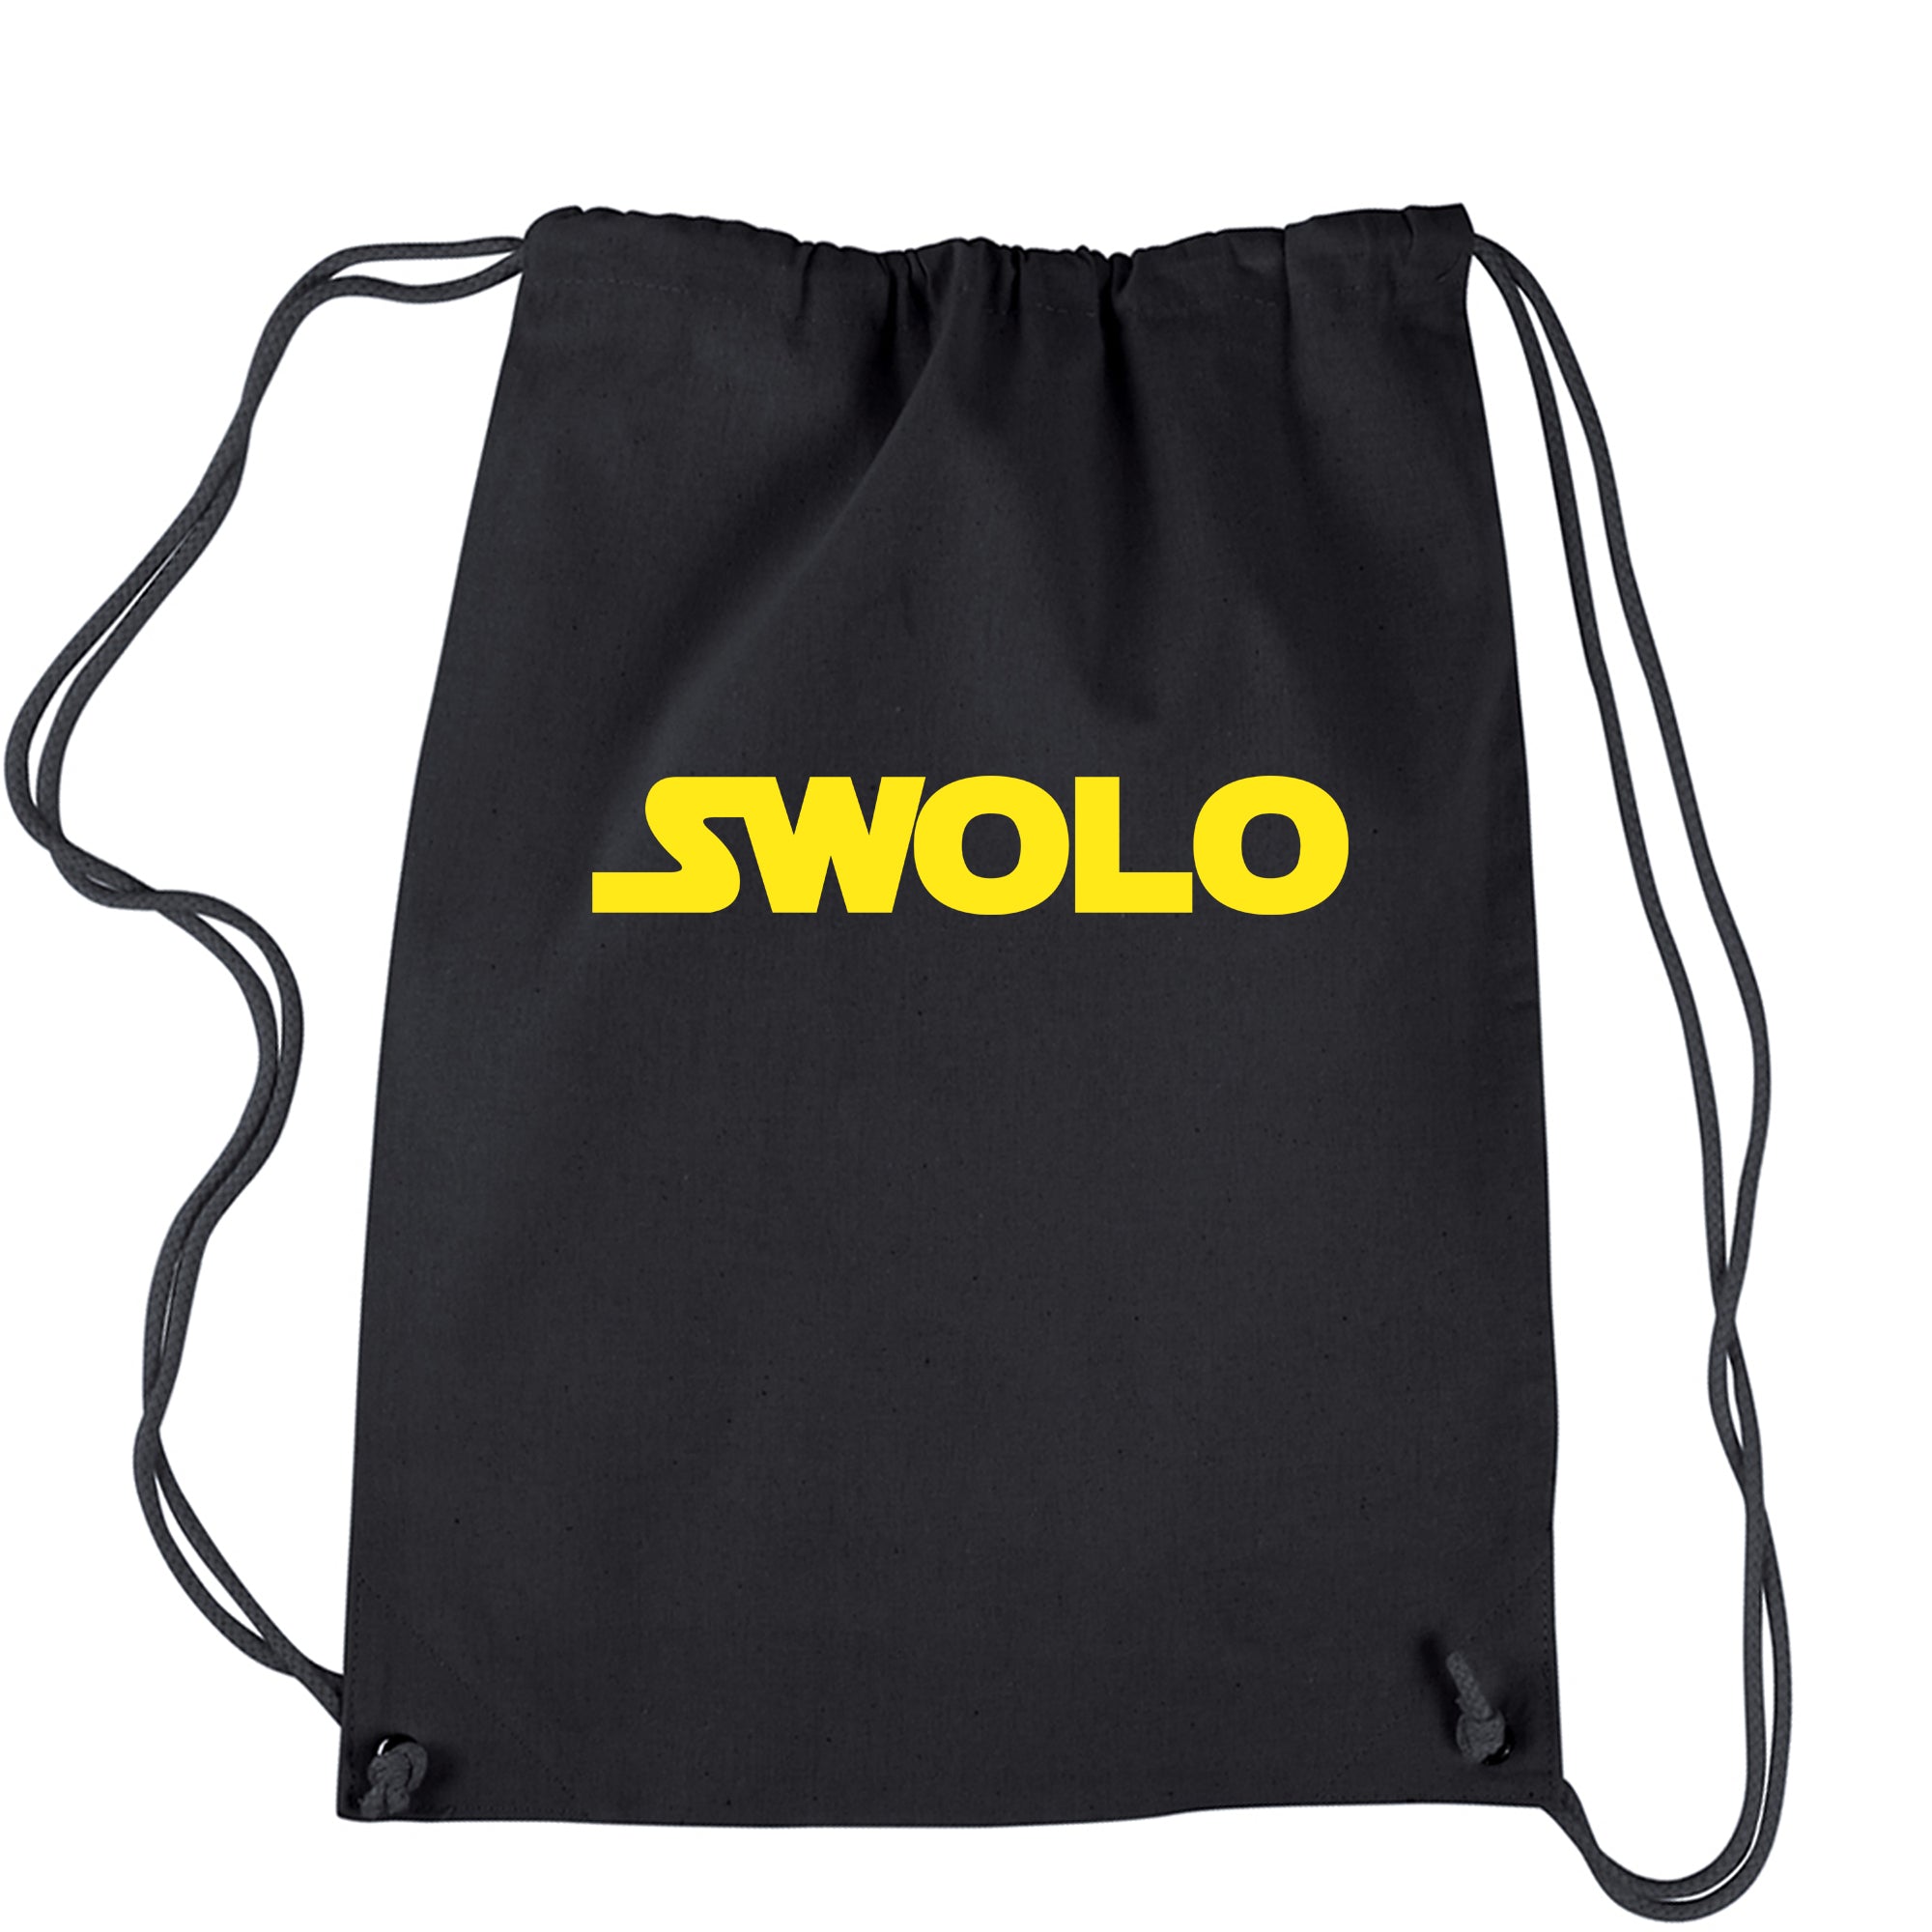 Ben Swolo Star Warship Funny Parody Drawstring Backpack